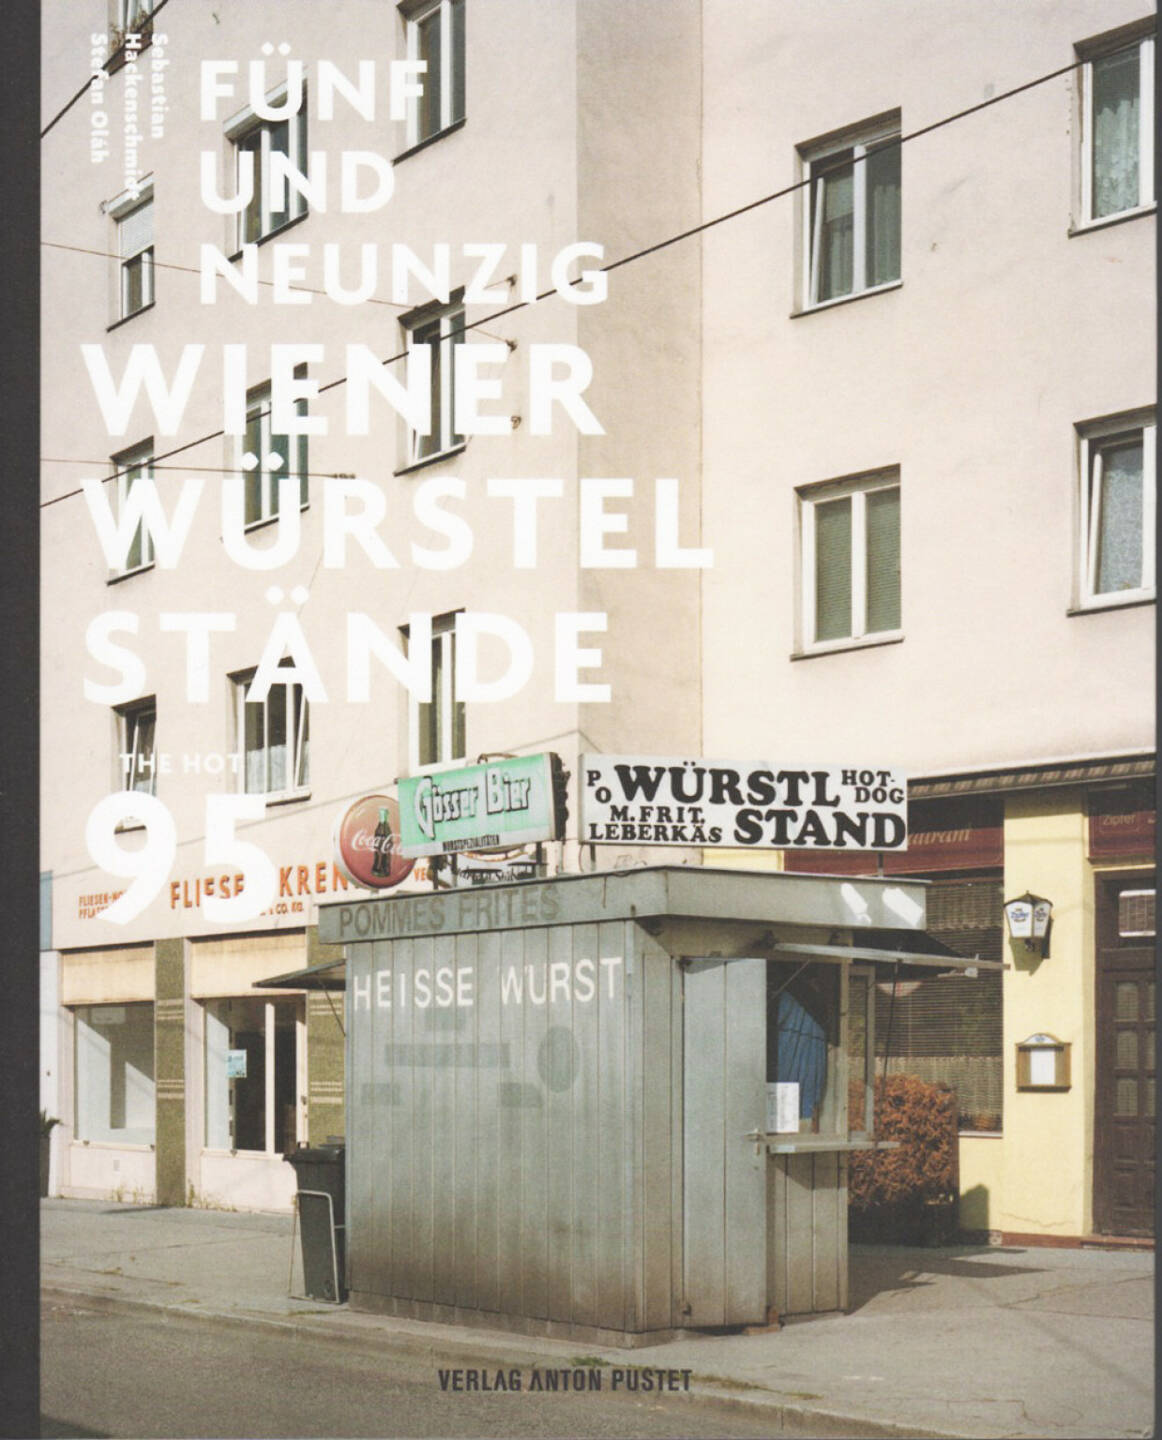 Stefan Olah - Fünfundneunzig Wiener Würstelstände, Anton Pustet 2013, Cover - http://josefchladek.com/book/stefan_olah_-_funfundneunzig_wiener_wurstelstande